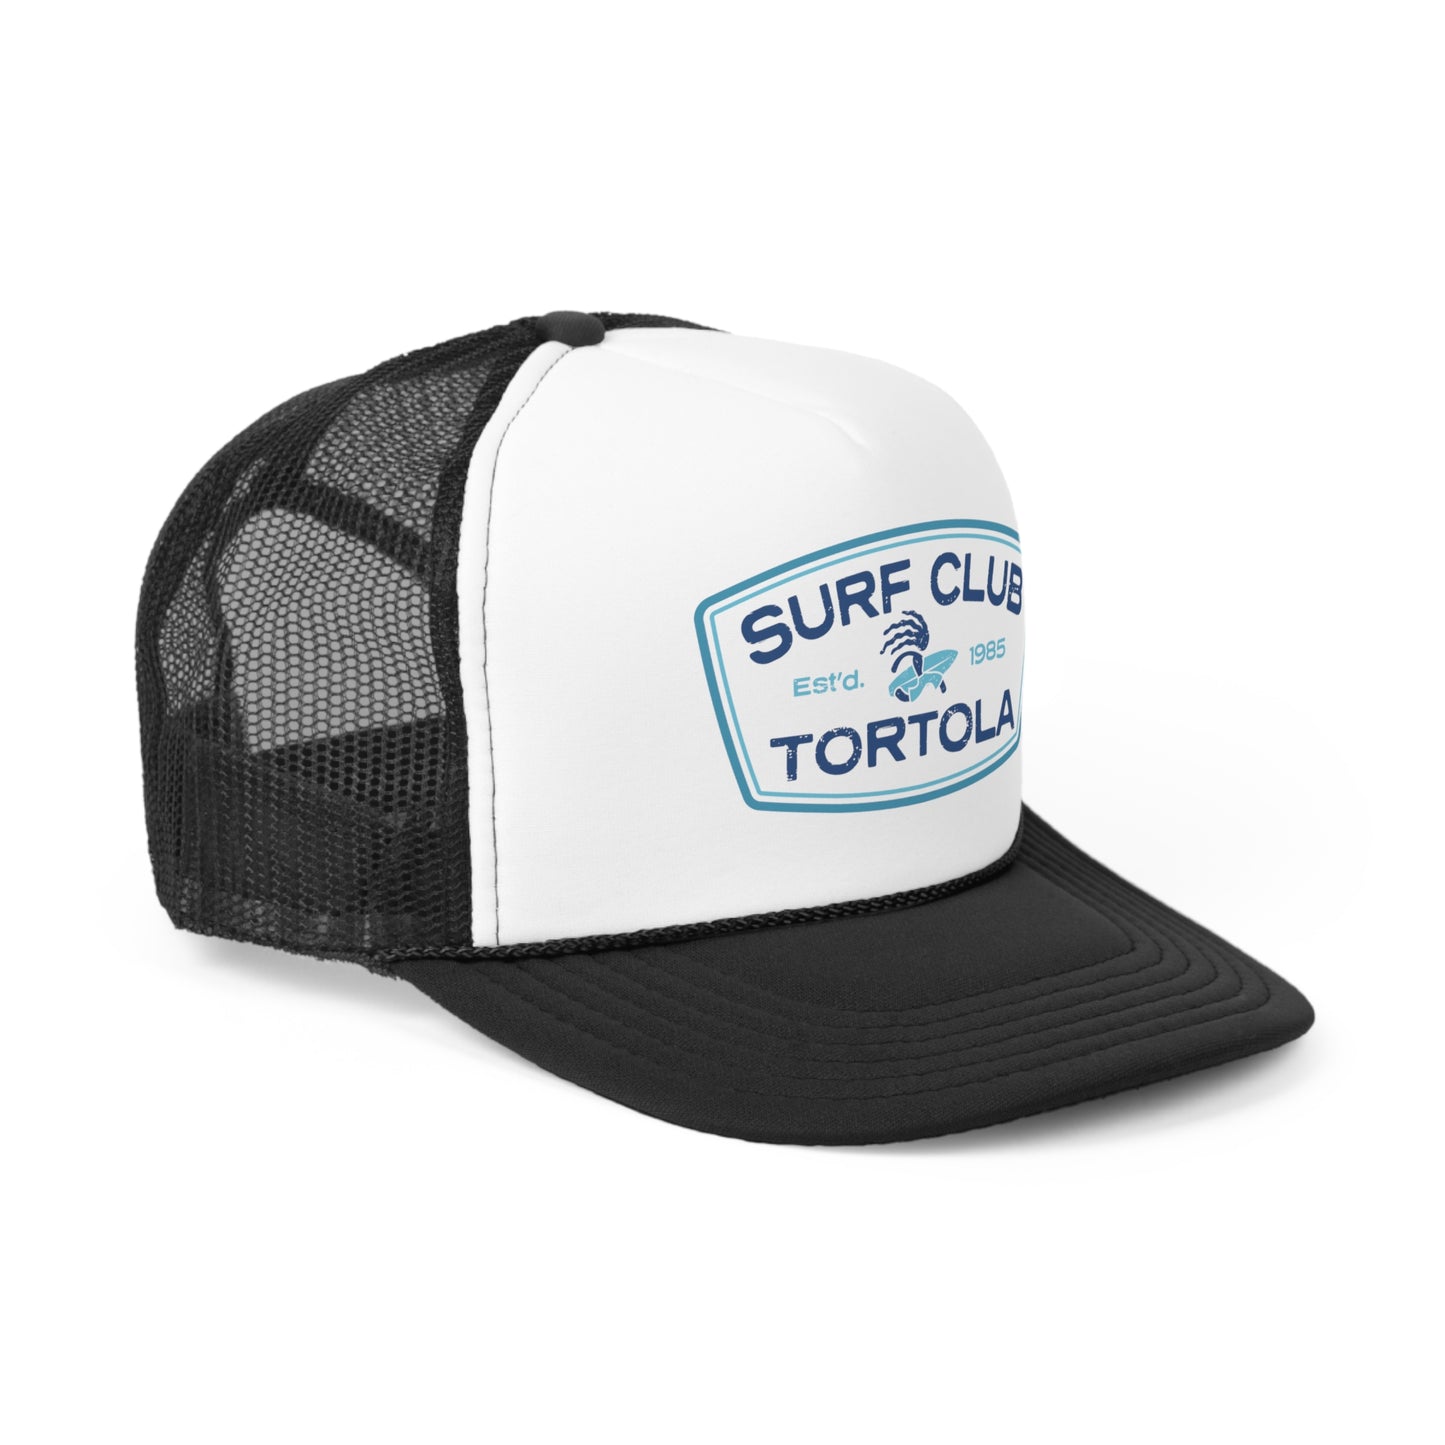 “Surf Club Tortola" Mesh-Back Trucker Cap